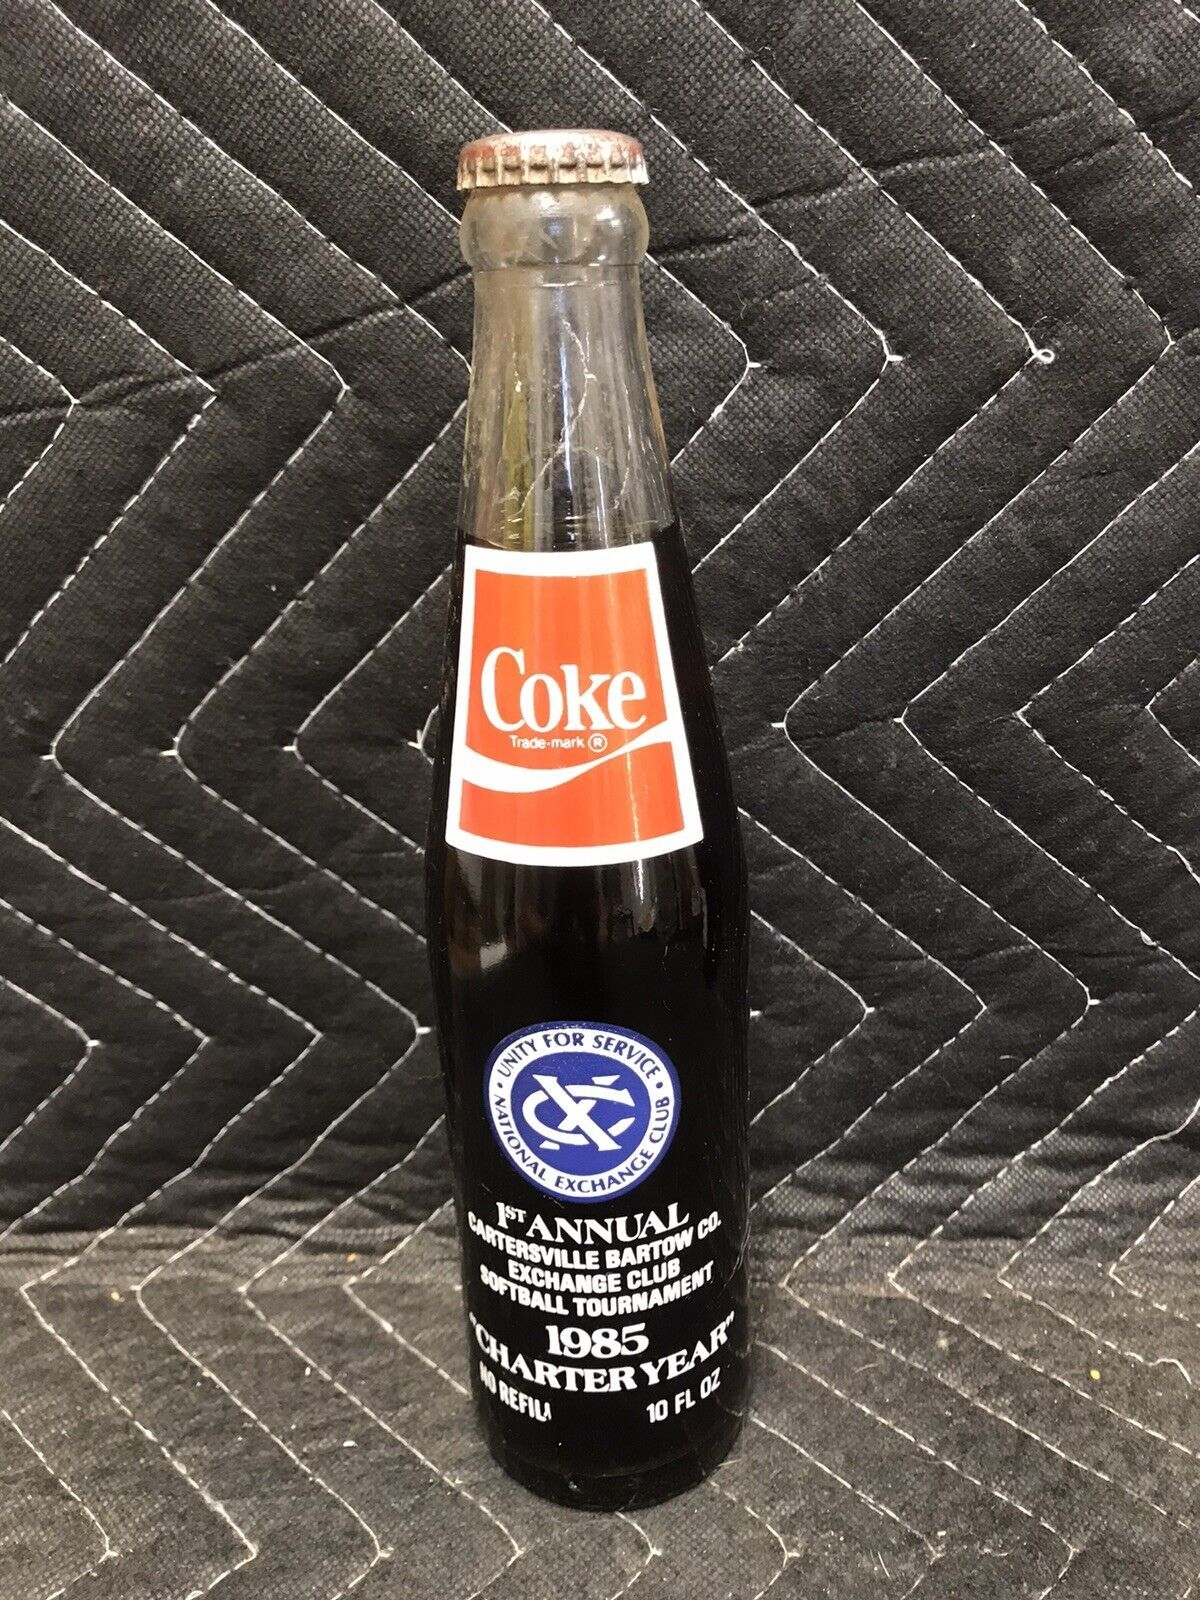 1985 National Exchange Club Cartersville Softball Coke Coca-Cola Bottle Unopened - $9.90